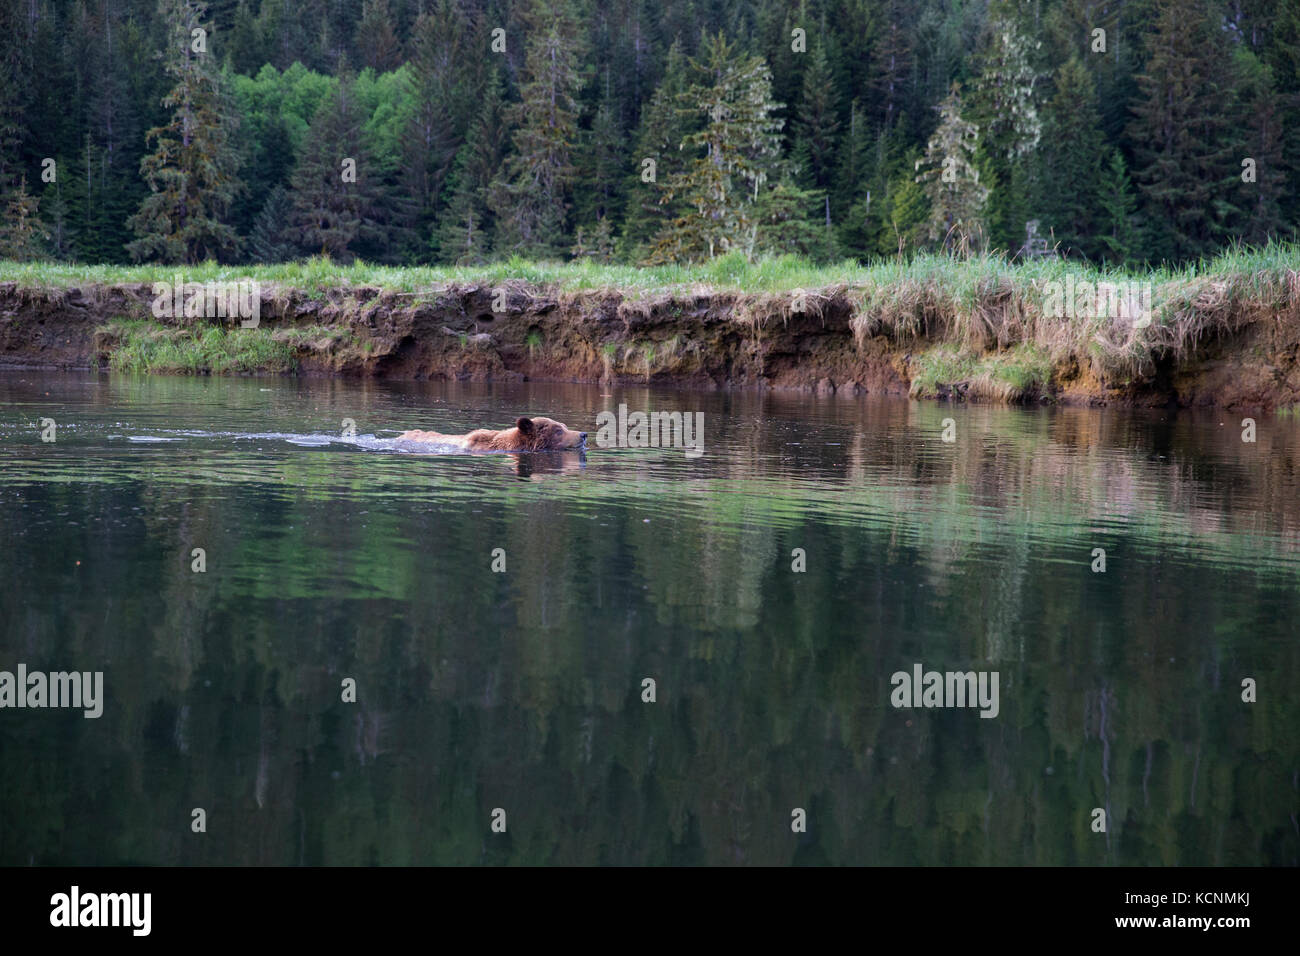 Grizzly Bear (Ursus arctos), große horriblis vernarbte Mann, Schwimmen, kwinimass Estuary, British Columbia, Kanada. Stockfoto